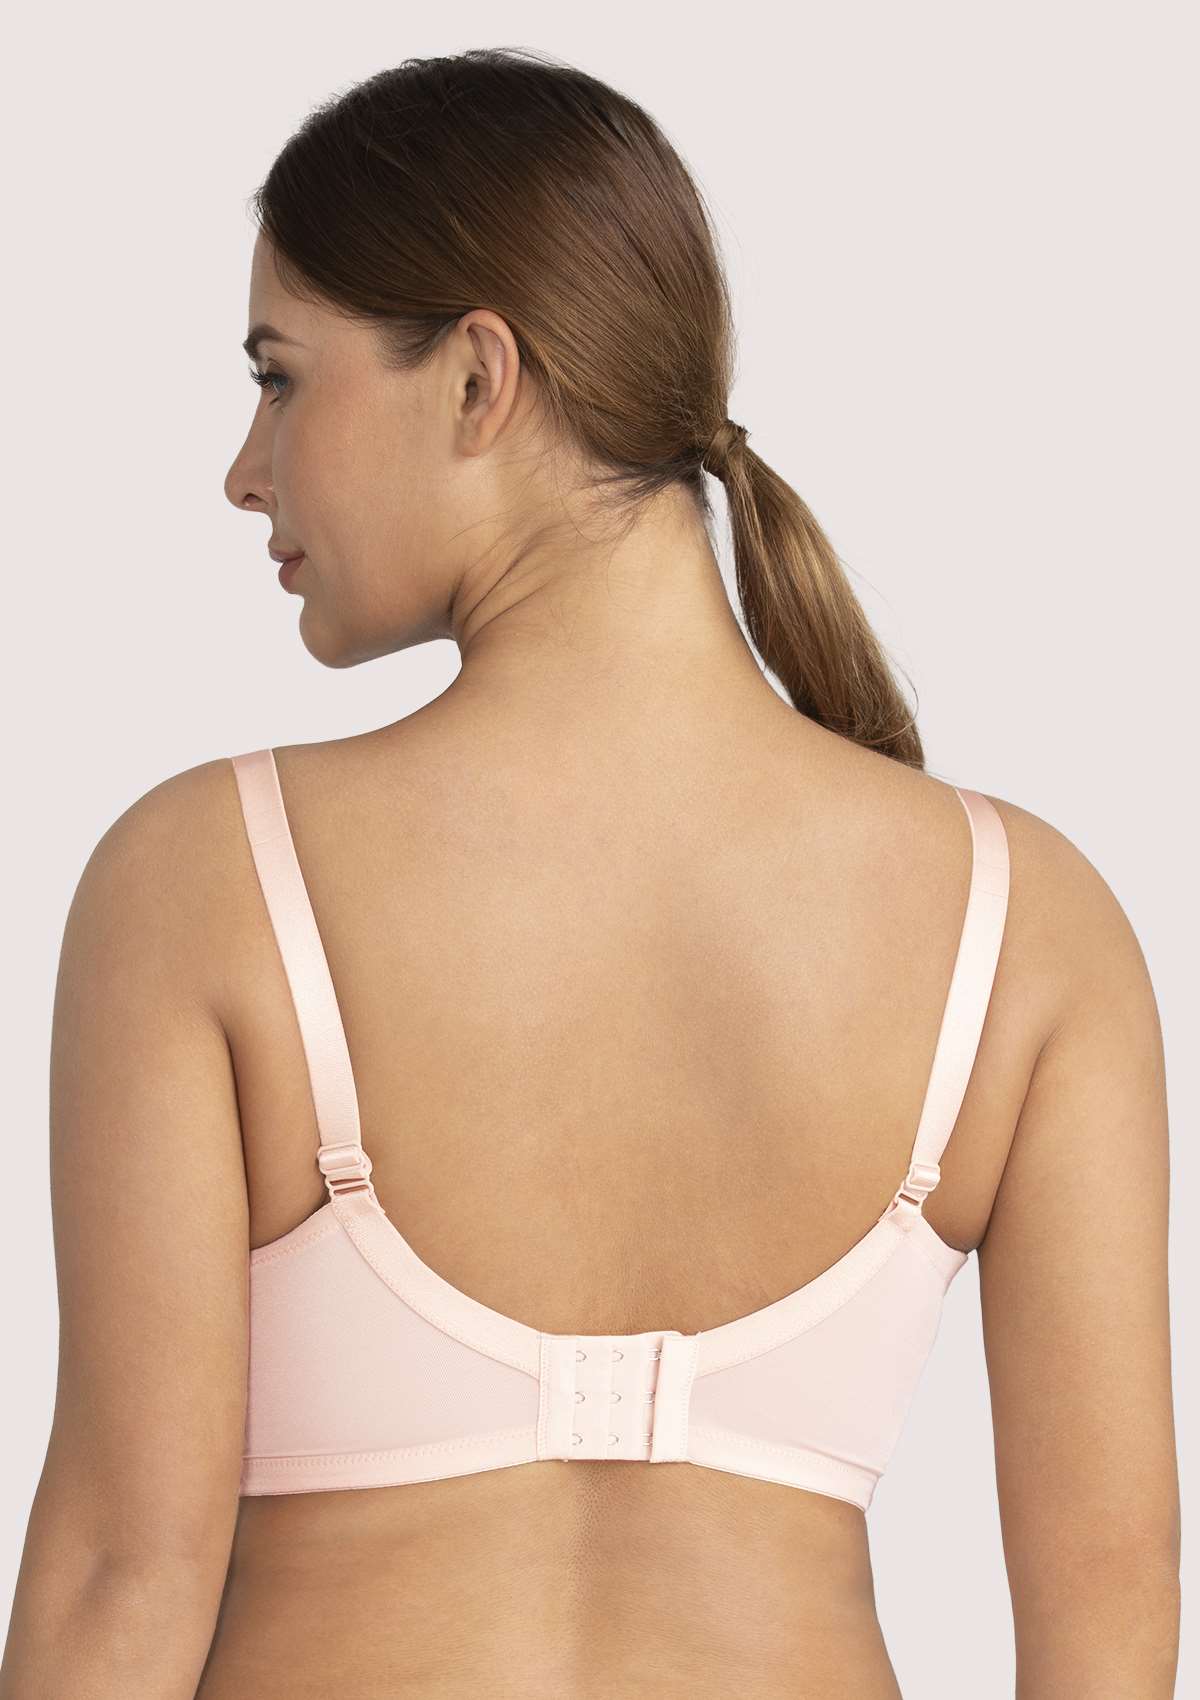 HSIA Sunflower Matching Bra And Panties Set: Comfortable Plus Size Bra - Pink / 42 / G